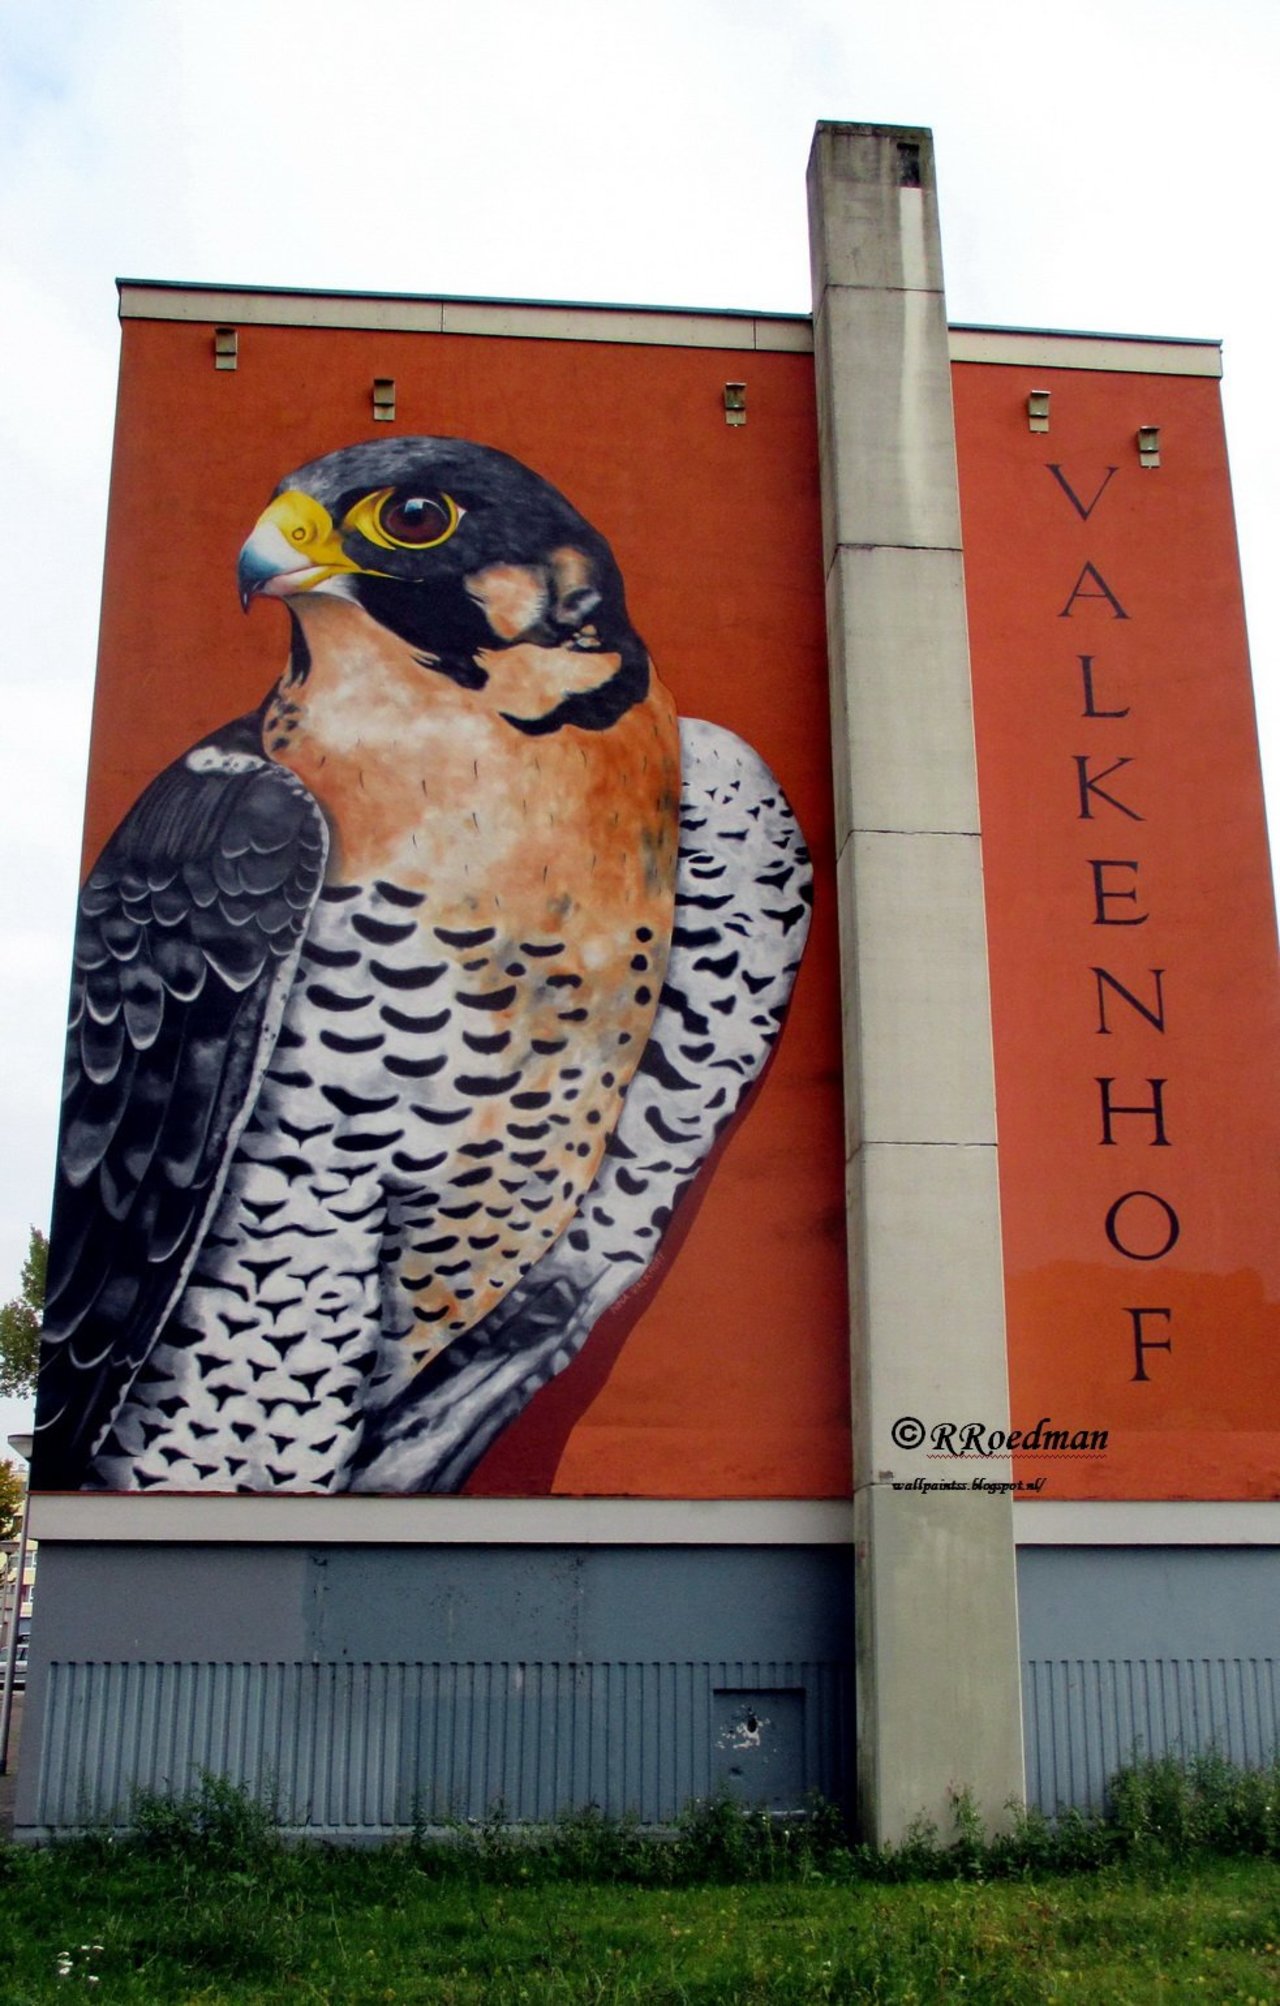 #streetart #graffiti #mural falcon in  #CapelleAanDenIJssel  #netherlands ,2 pics at http://wallpaintss.blogspot.nl https://t.co/eVvY57fmT3